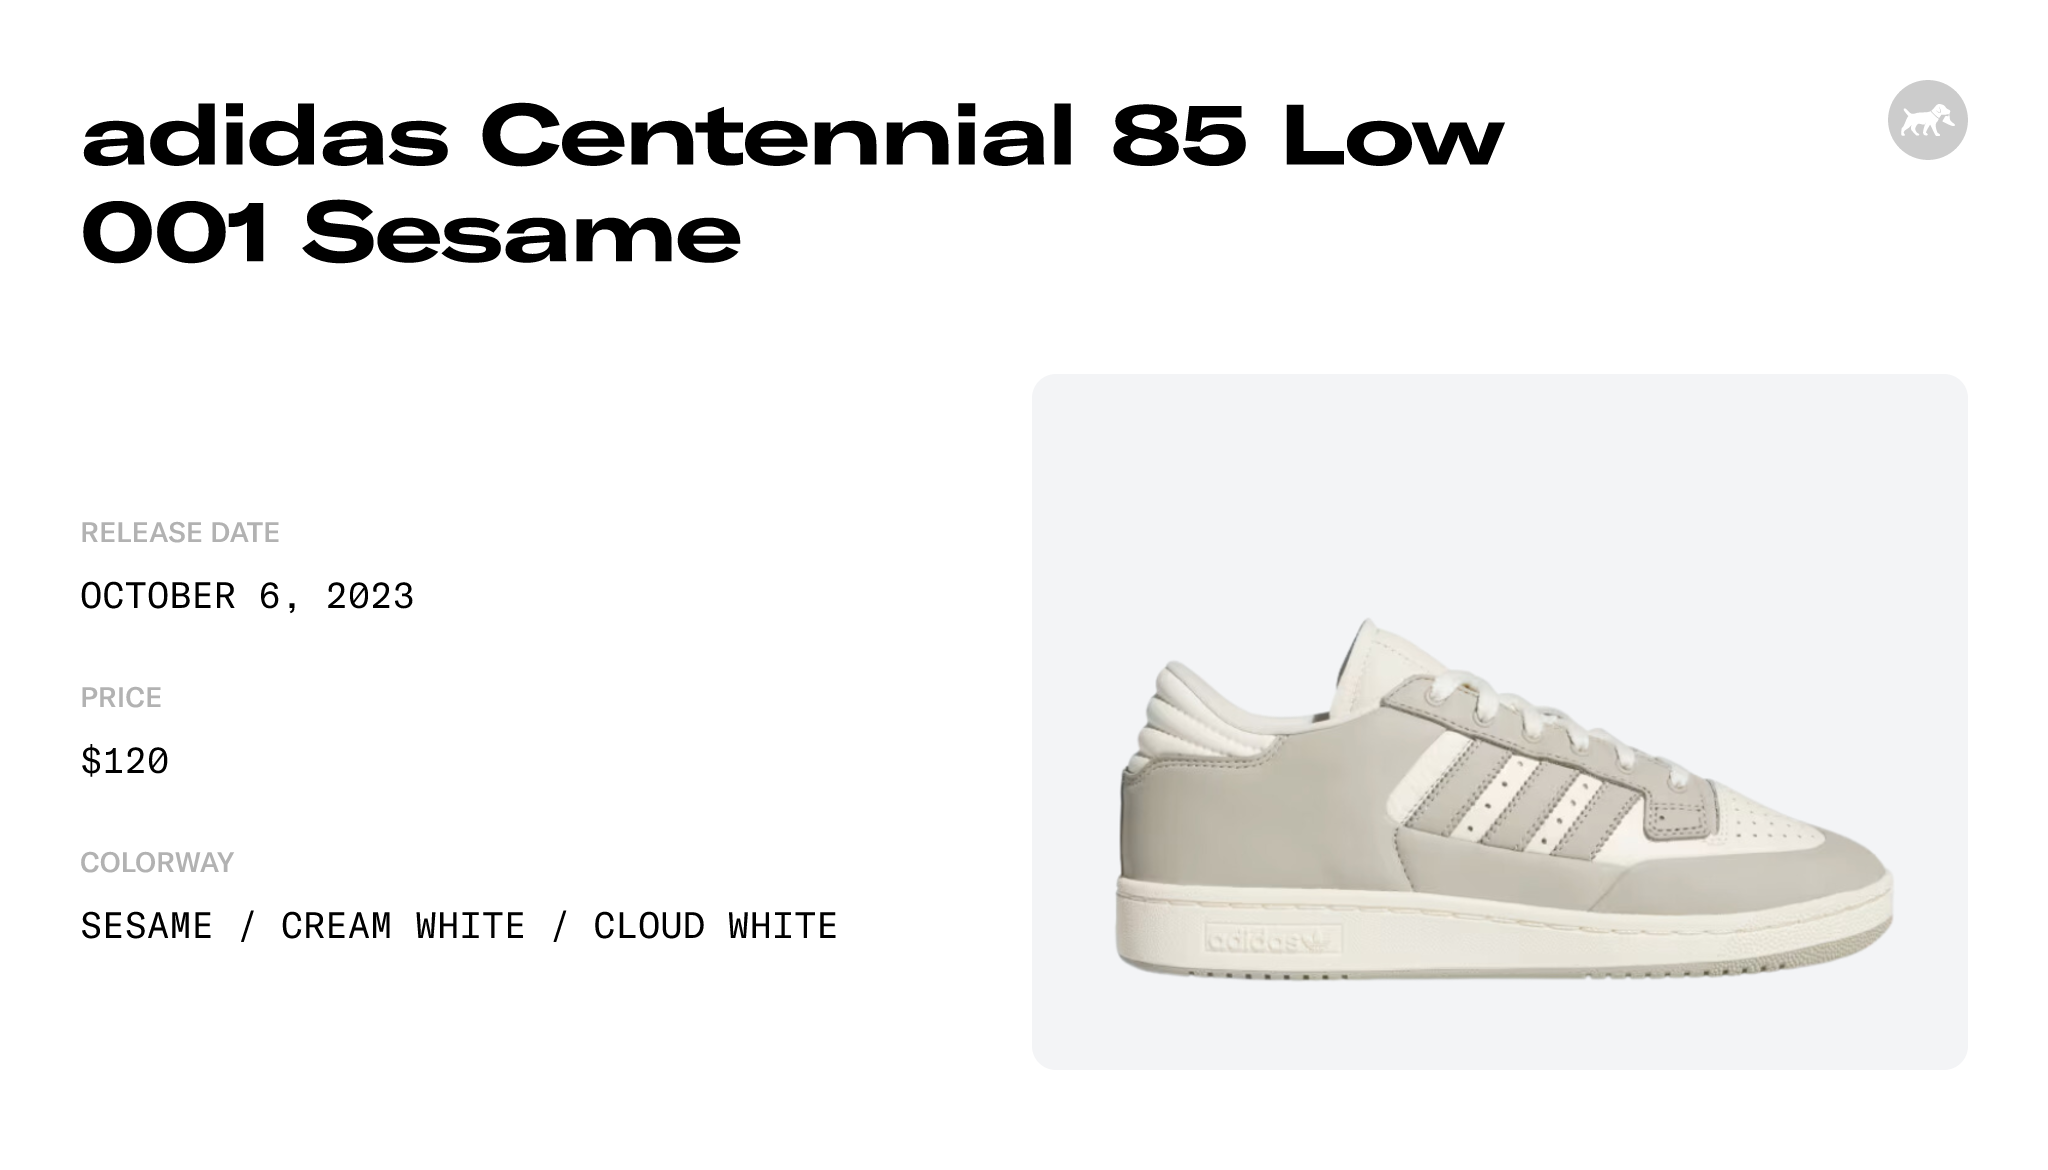 adidas Centennial 85 Low 001 Sesame - ID5774 Raffles and Release Date